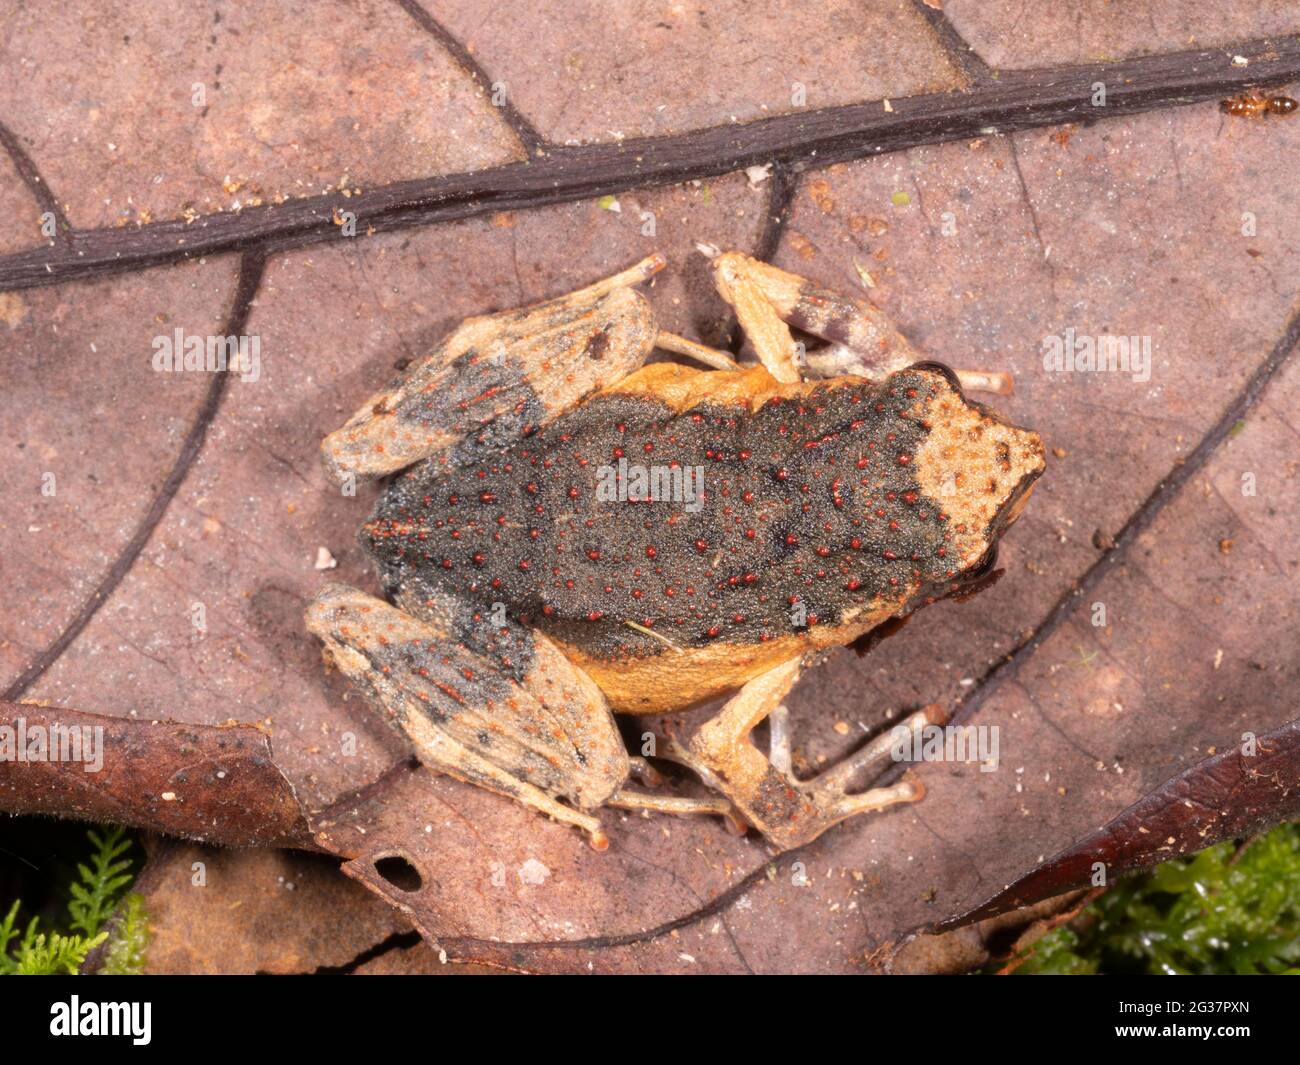 Dwarf jungle frog (Engystomops petersi) in the rainforest, Morona Santiago province, Ecuador Stock Photo